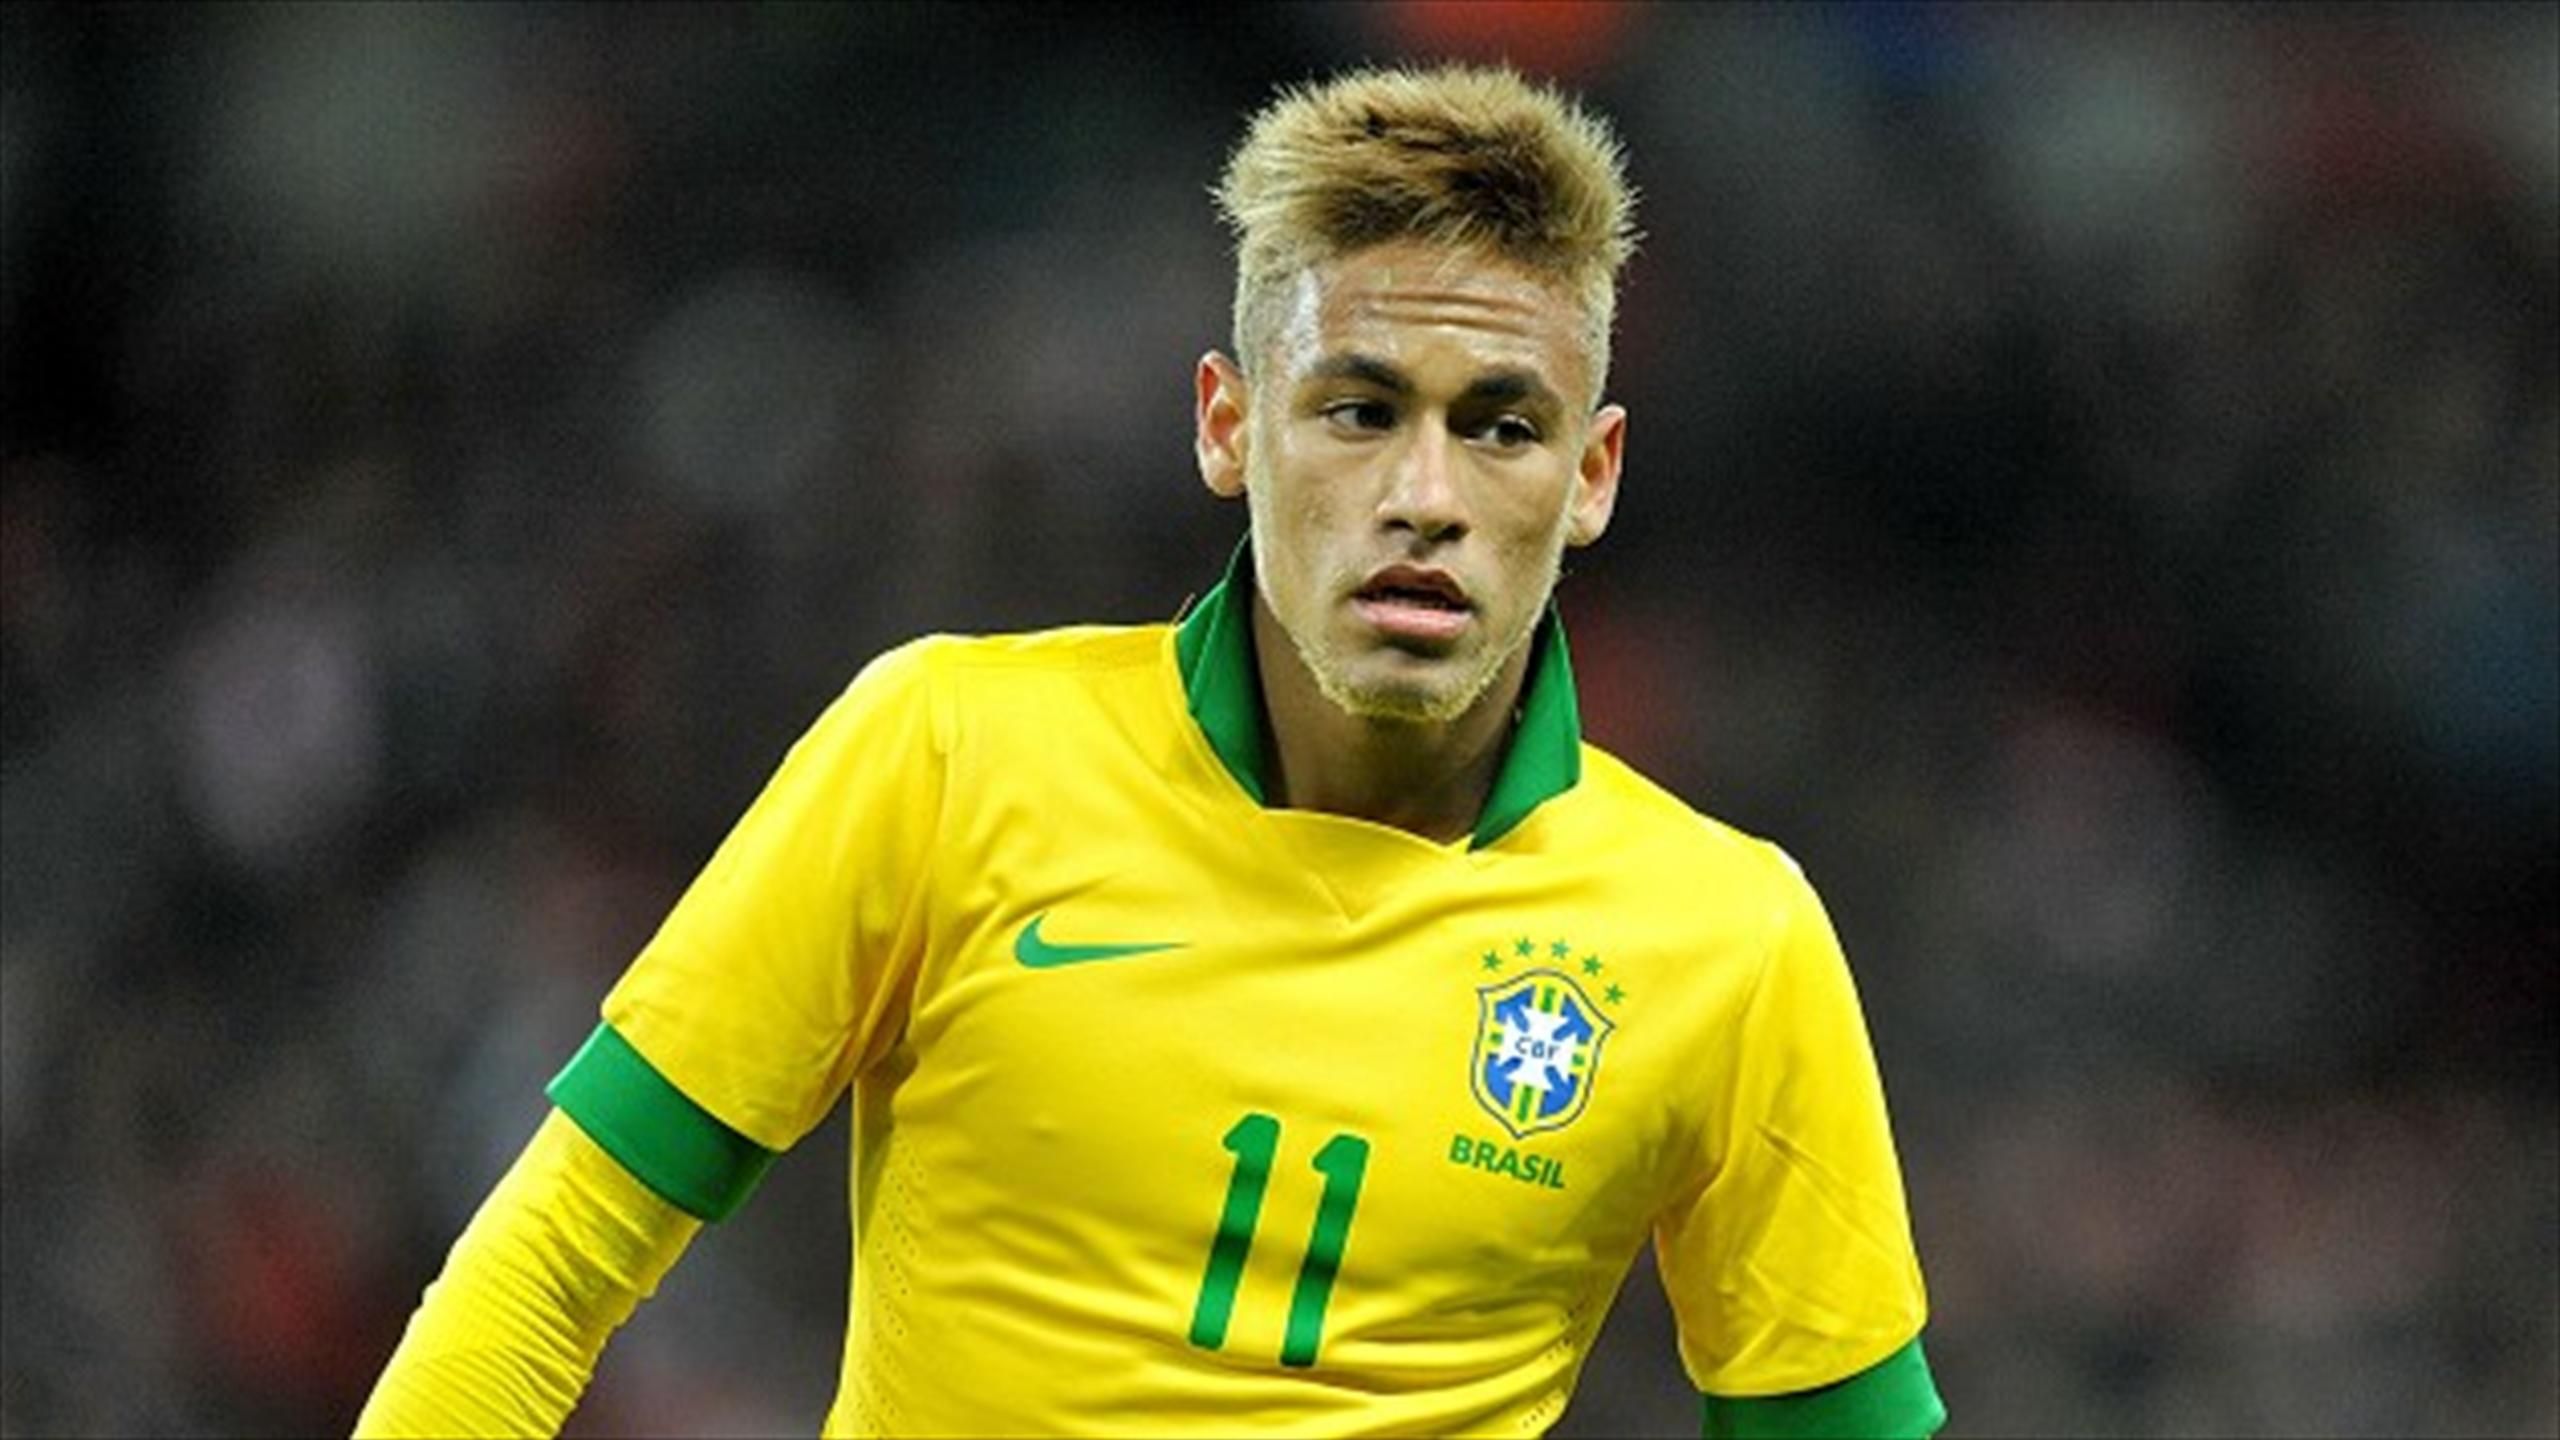 PICS The Neymar Haircut